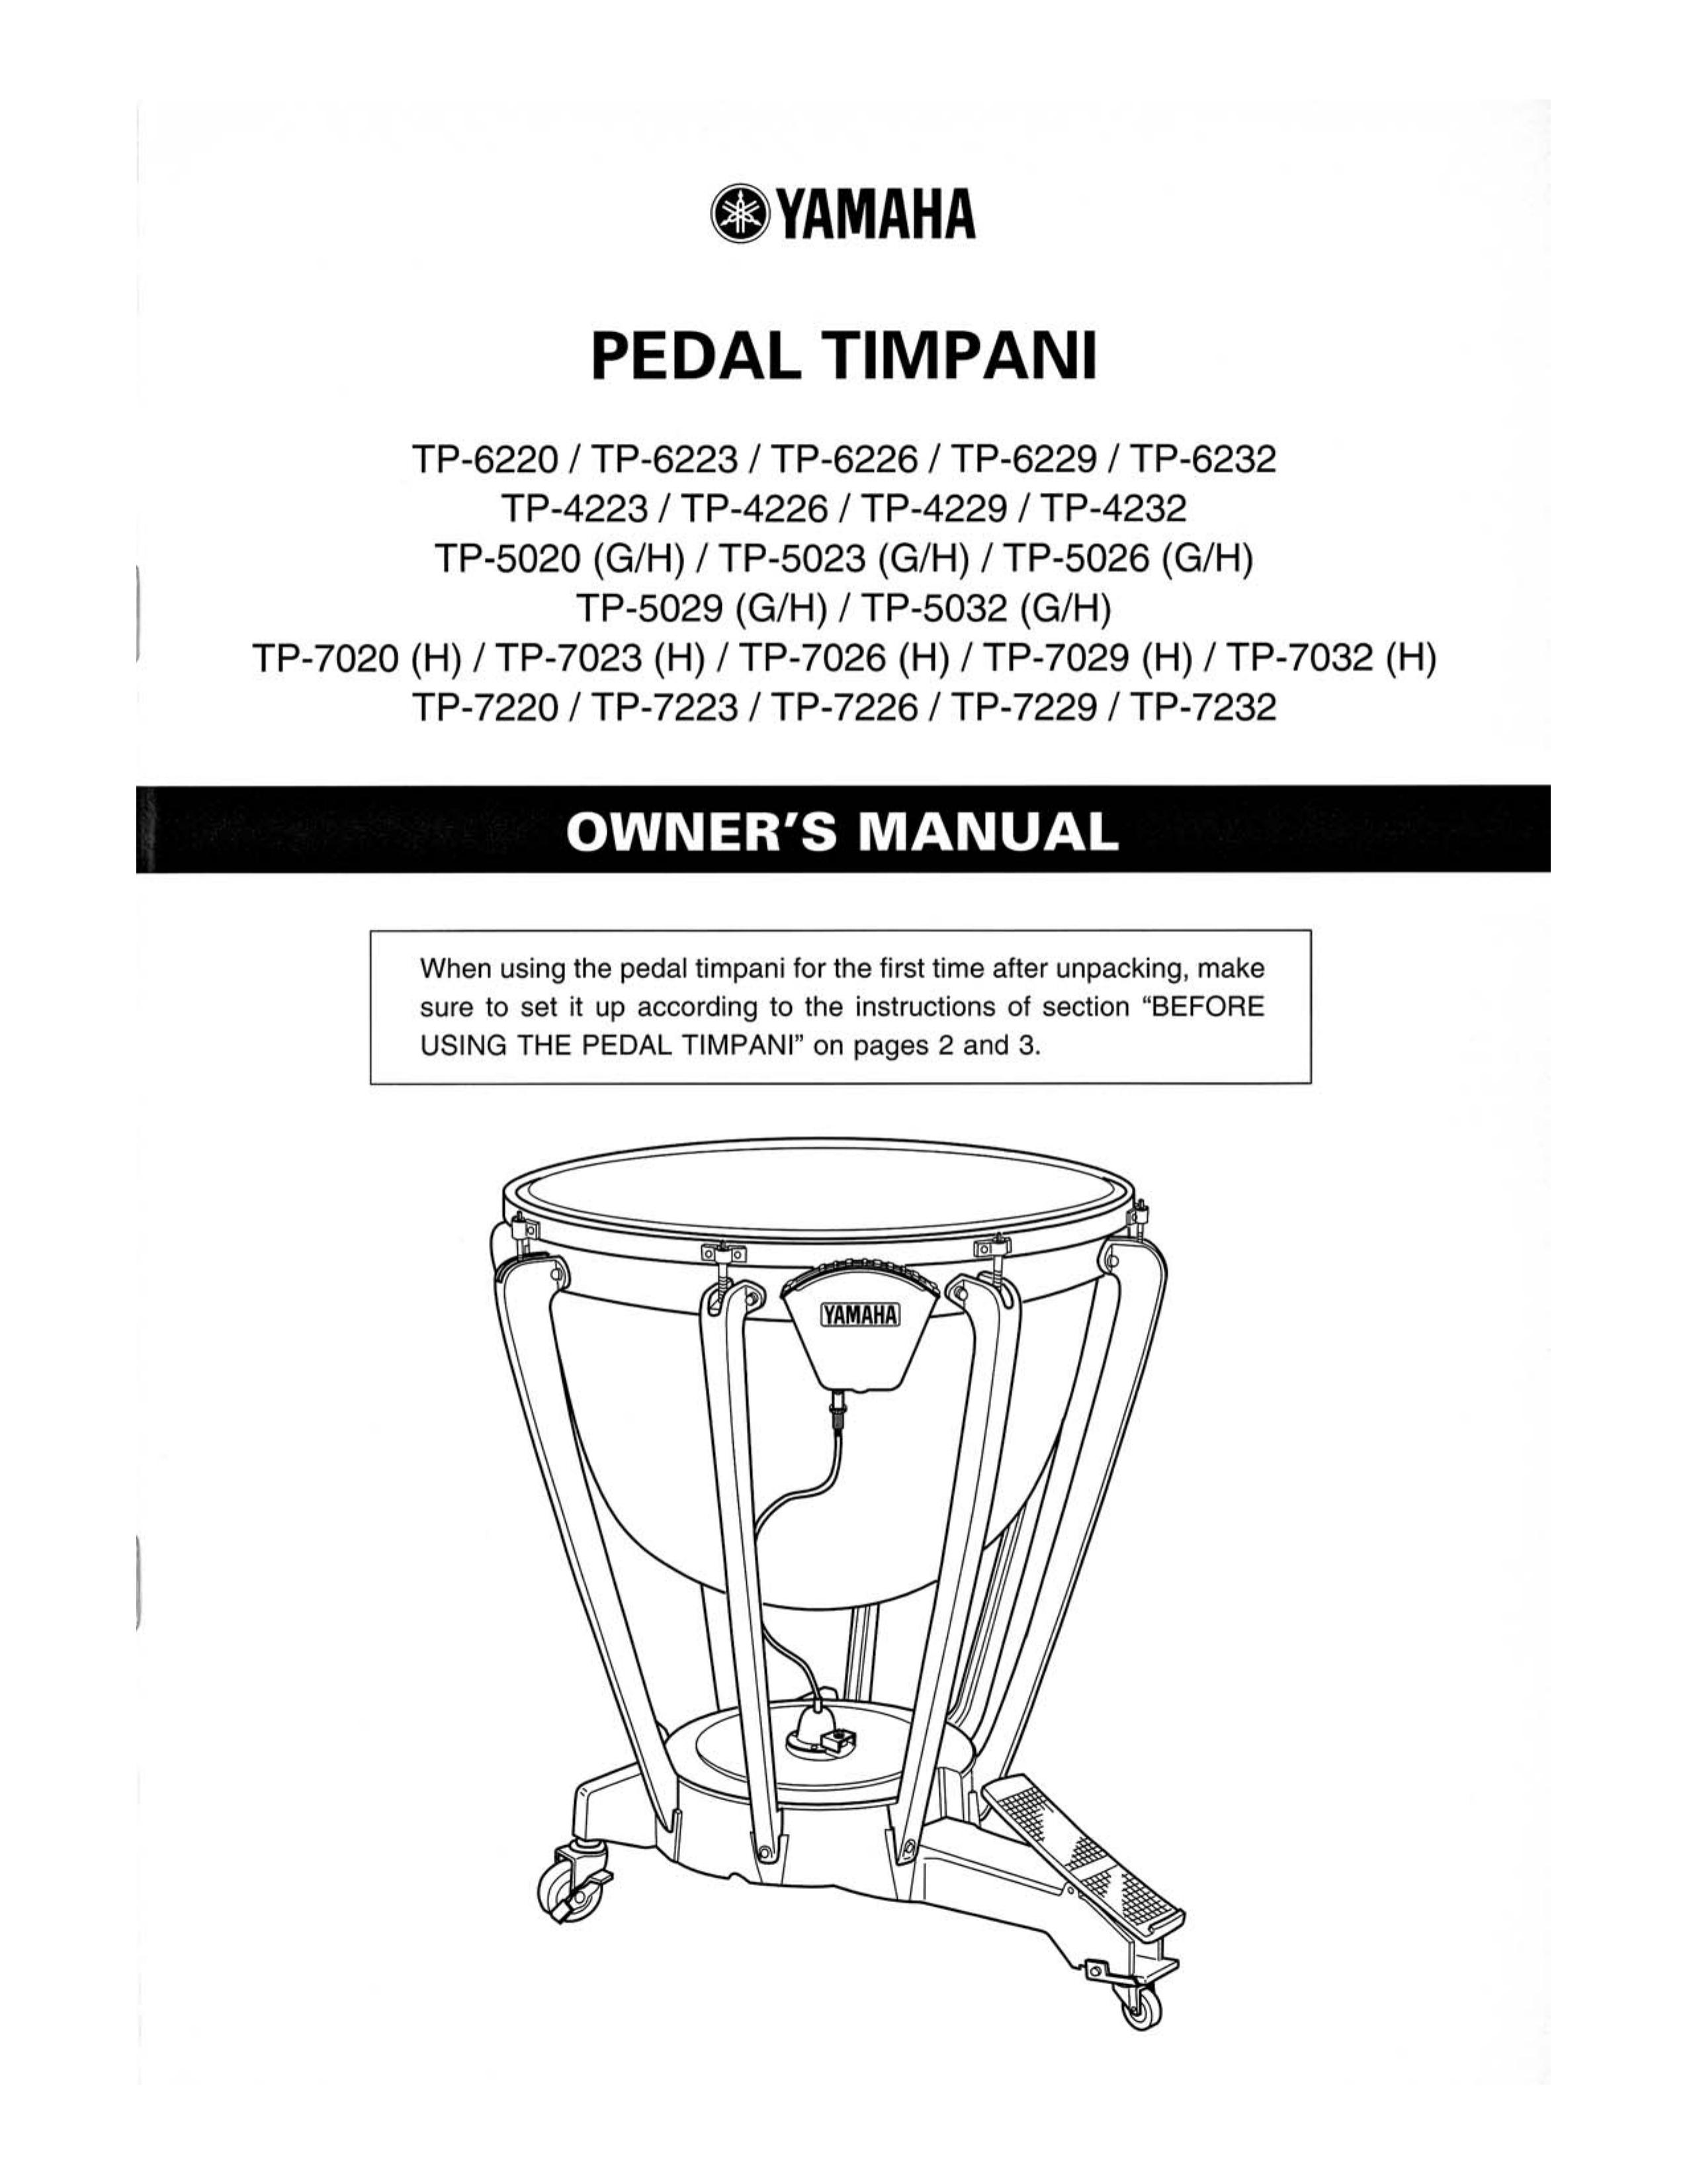 Yamaha TP-5029 Music Pedal User Manual